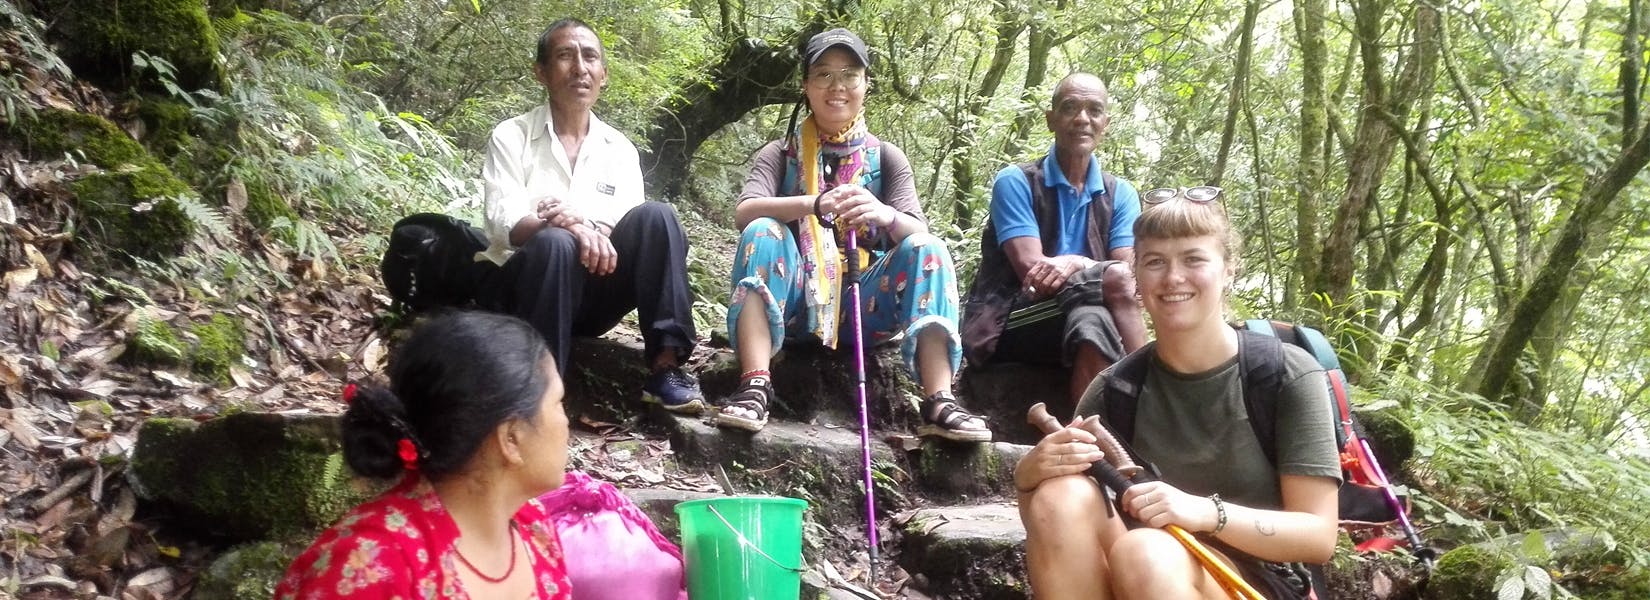 3 Hikes in Kathmandu Valley - <span class="font-light">3 days</span>